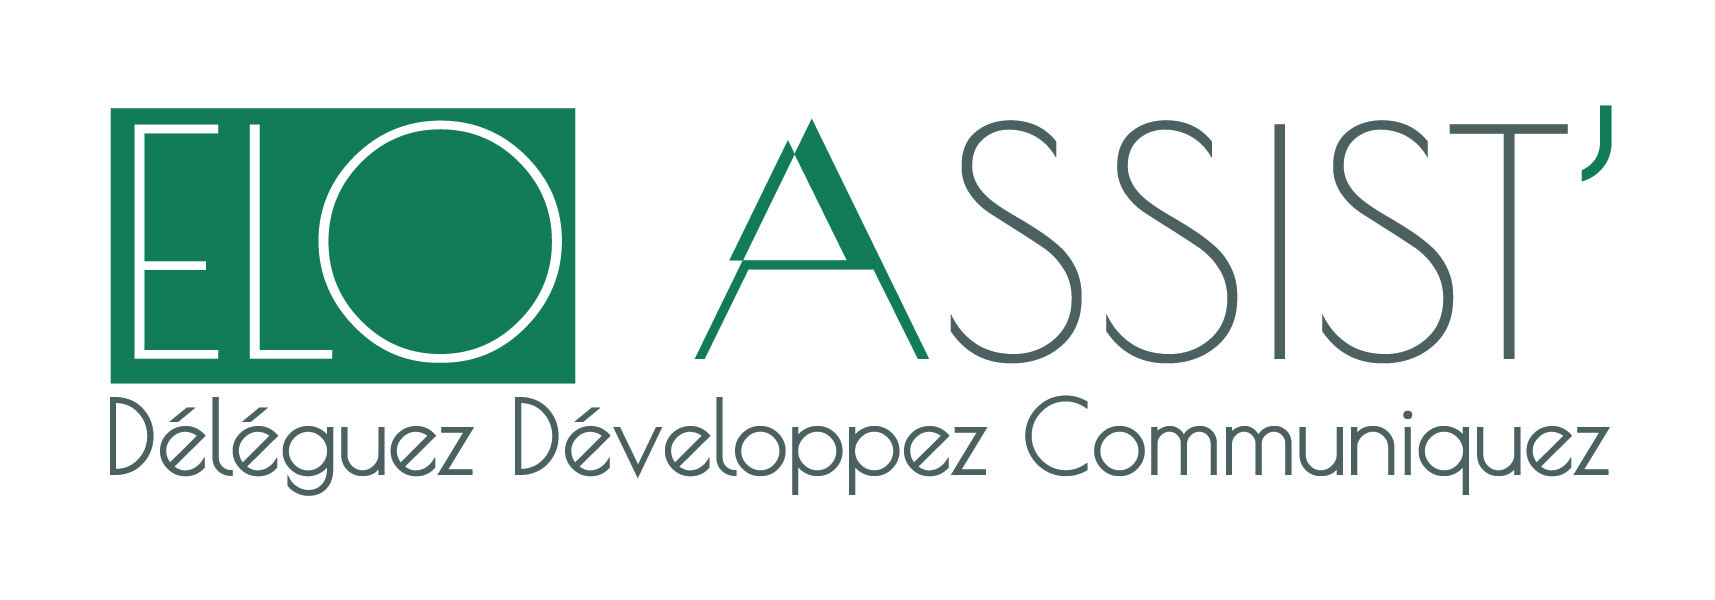 Logo-EloAssist.jpg